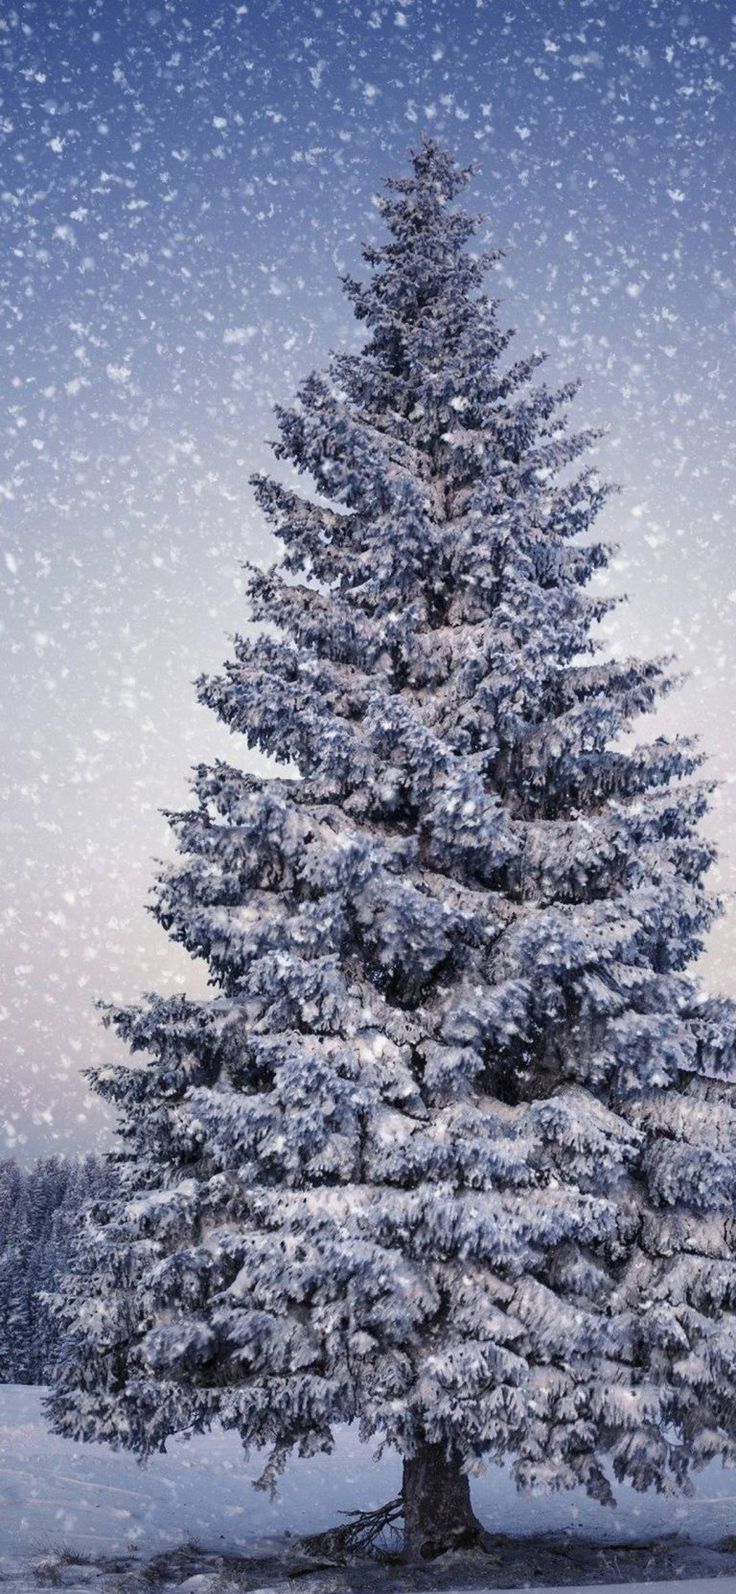 Samsung Galaxy A50 Wallpaper. Christmas tree wallpaper, iPhone wallpaper winter, Snowy christmas tree